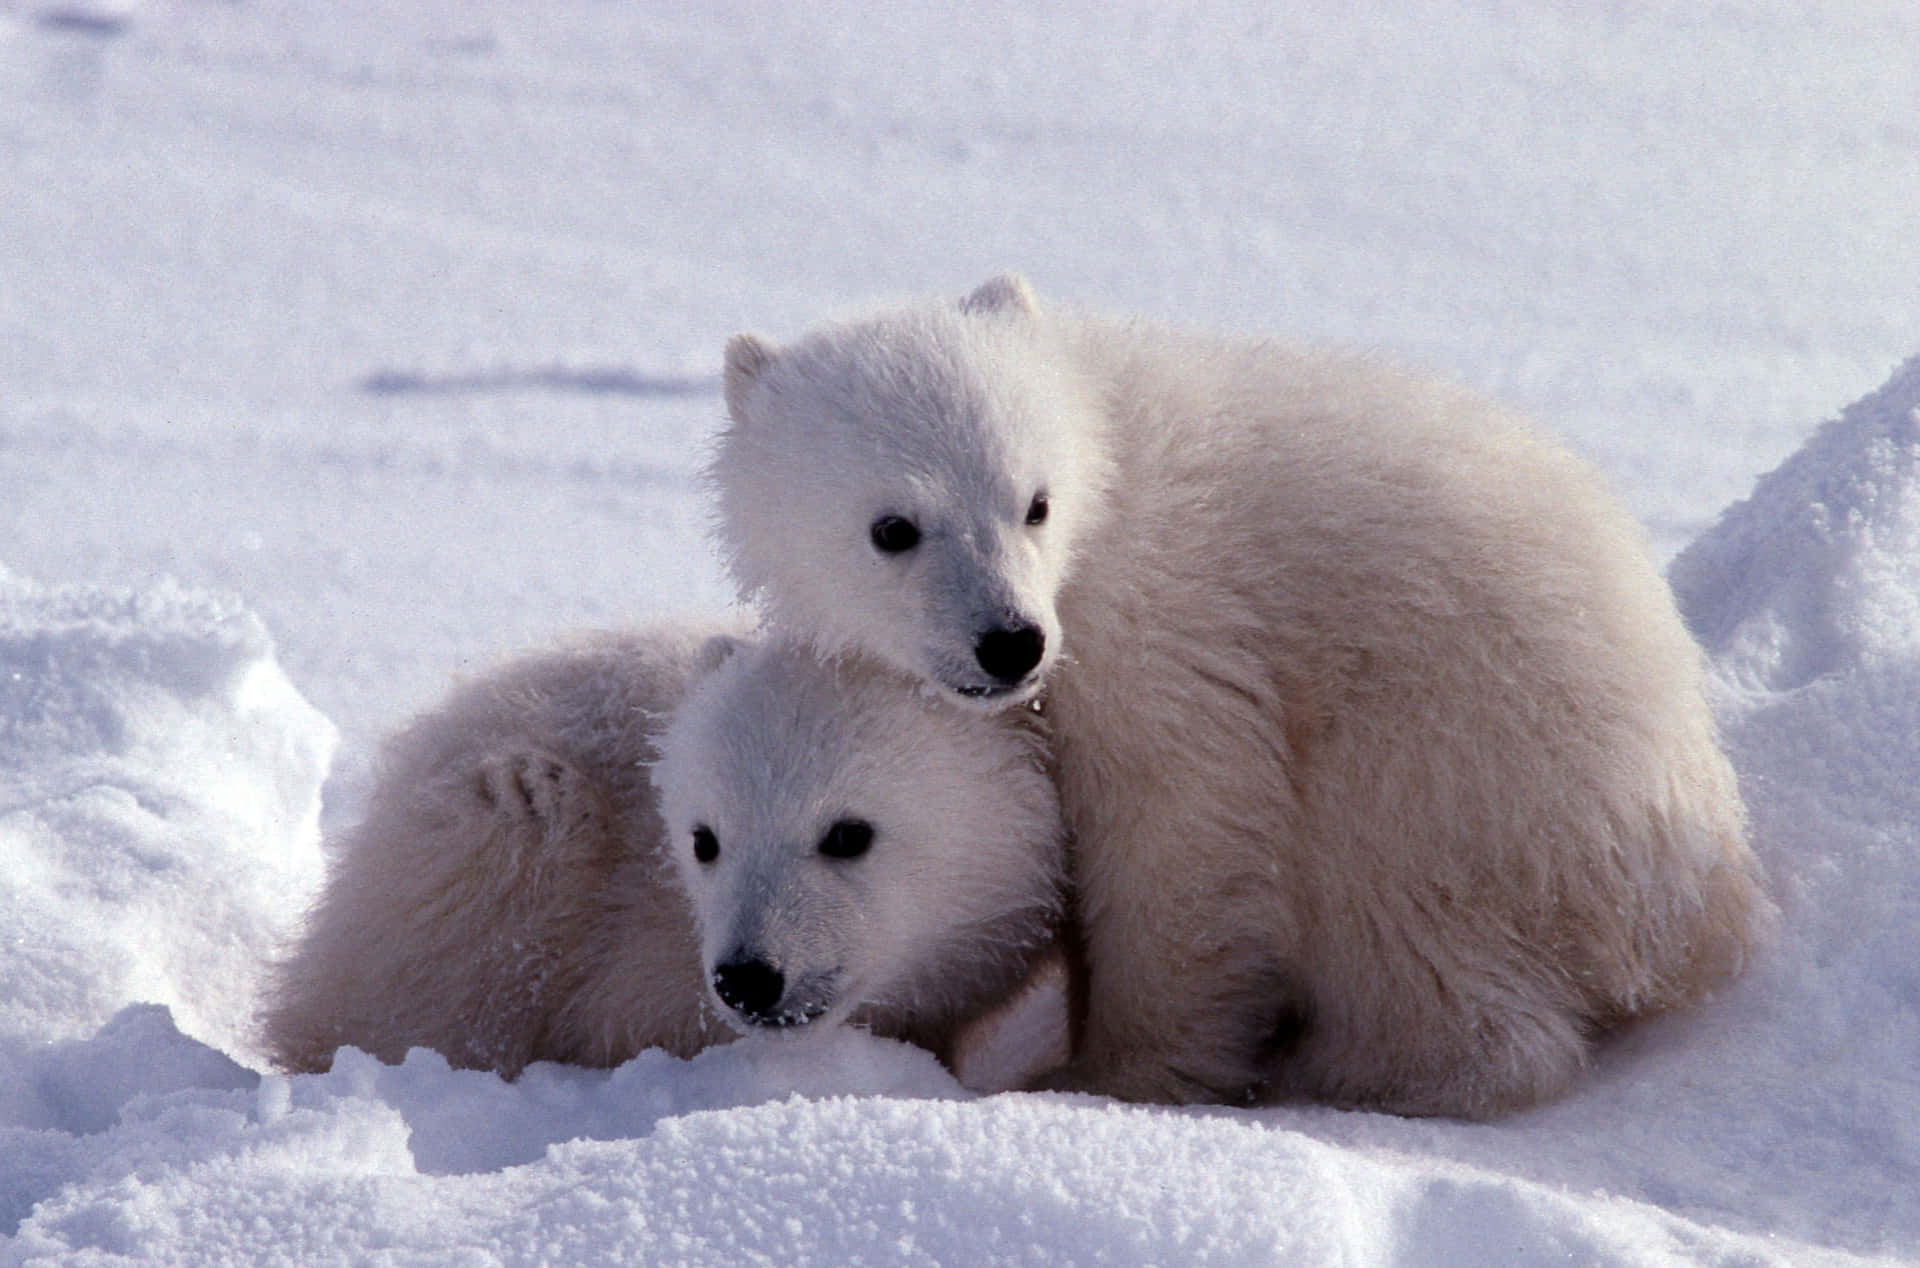 A majestic polar bear enjoying the cold in its natural habitat